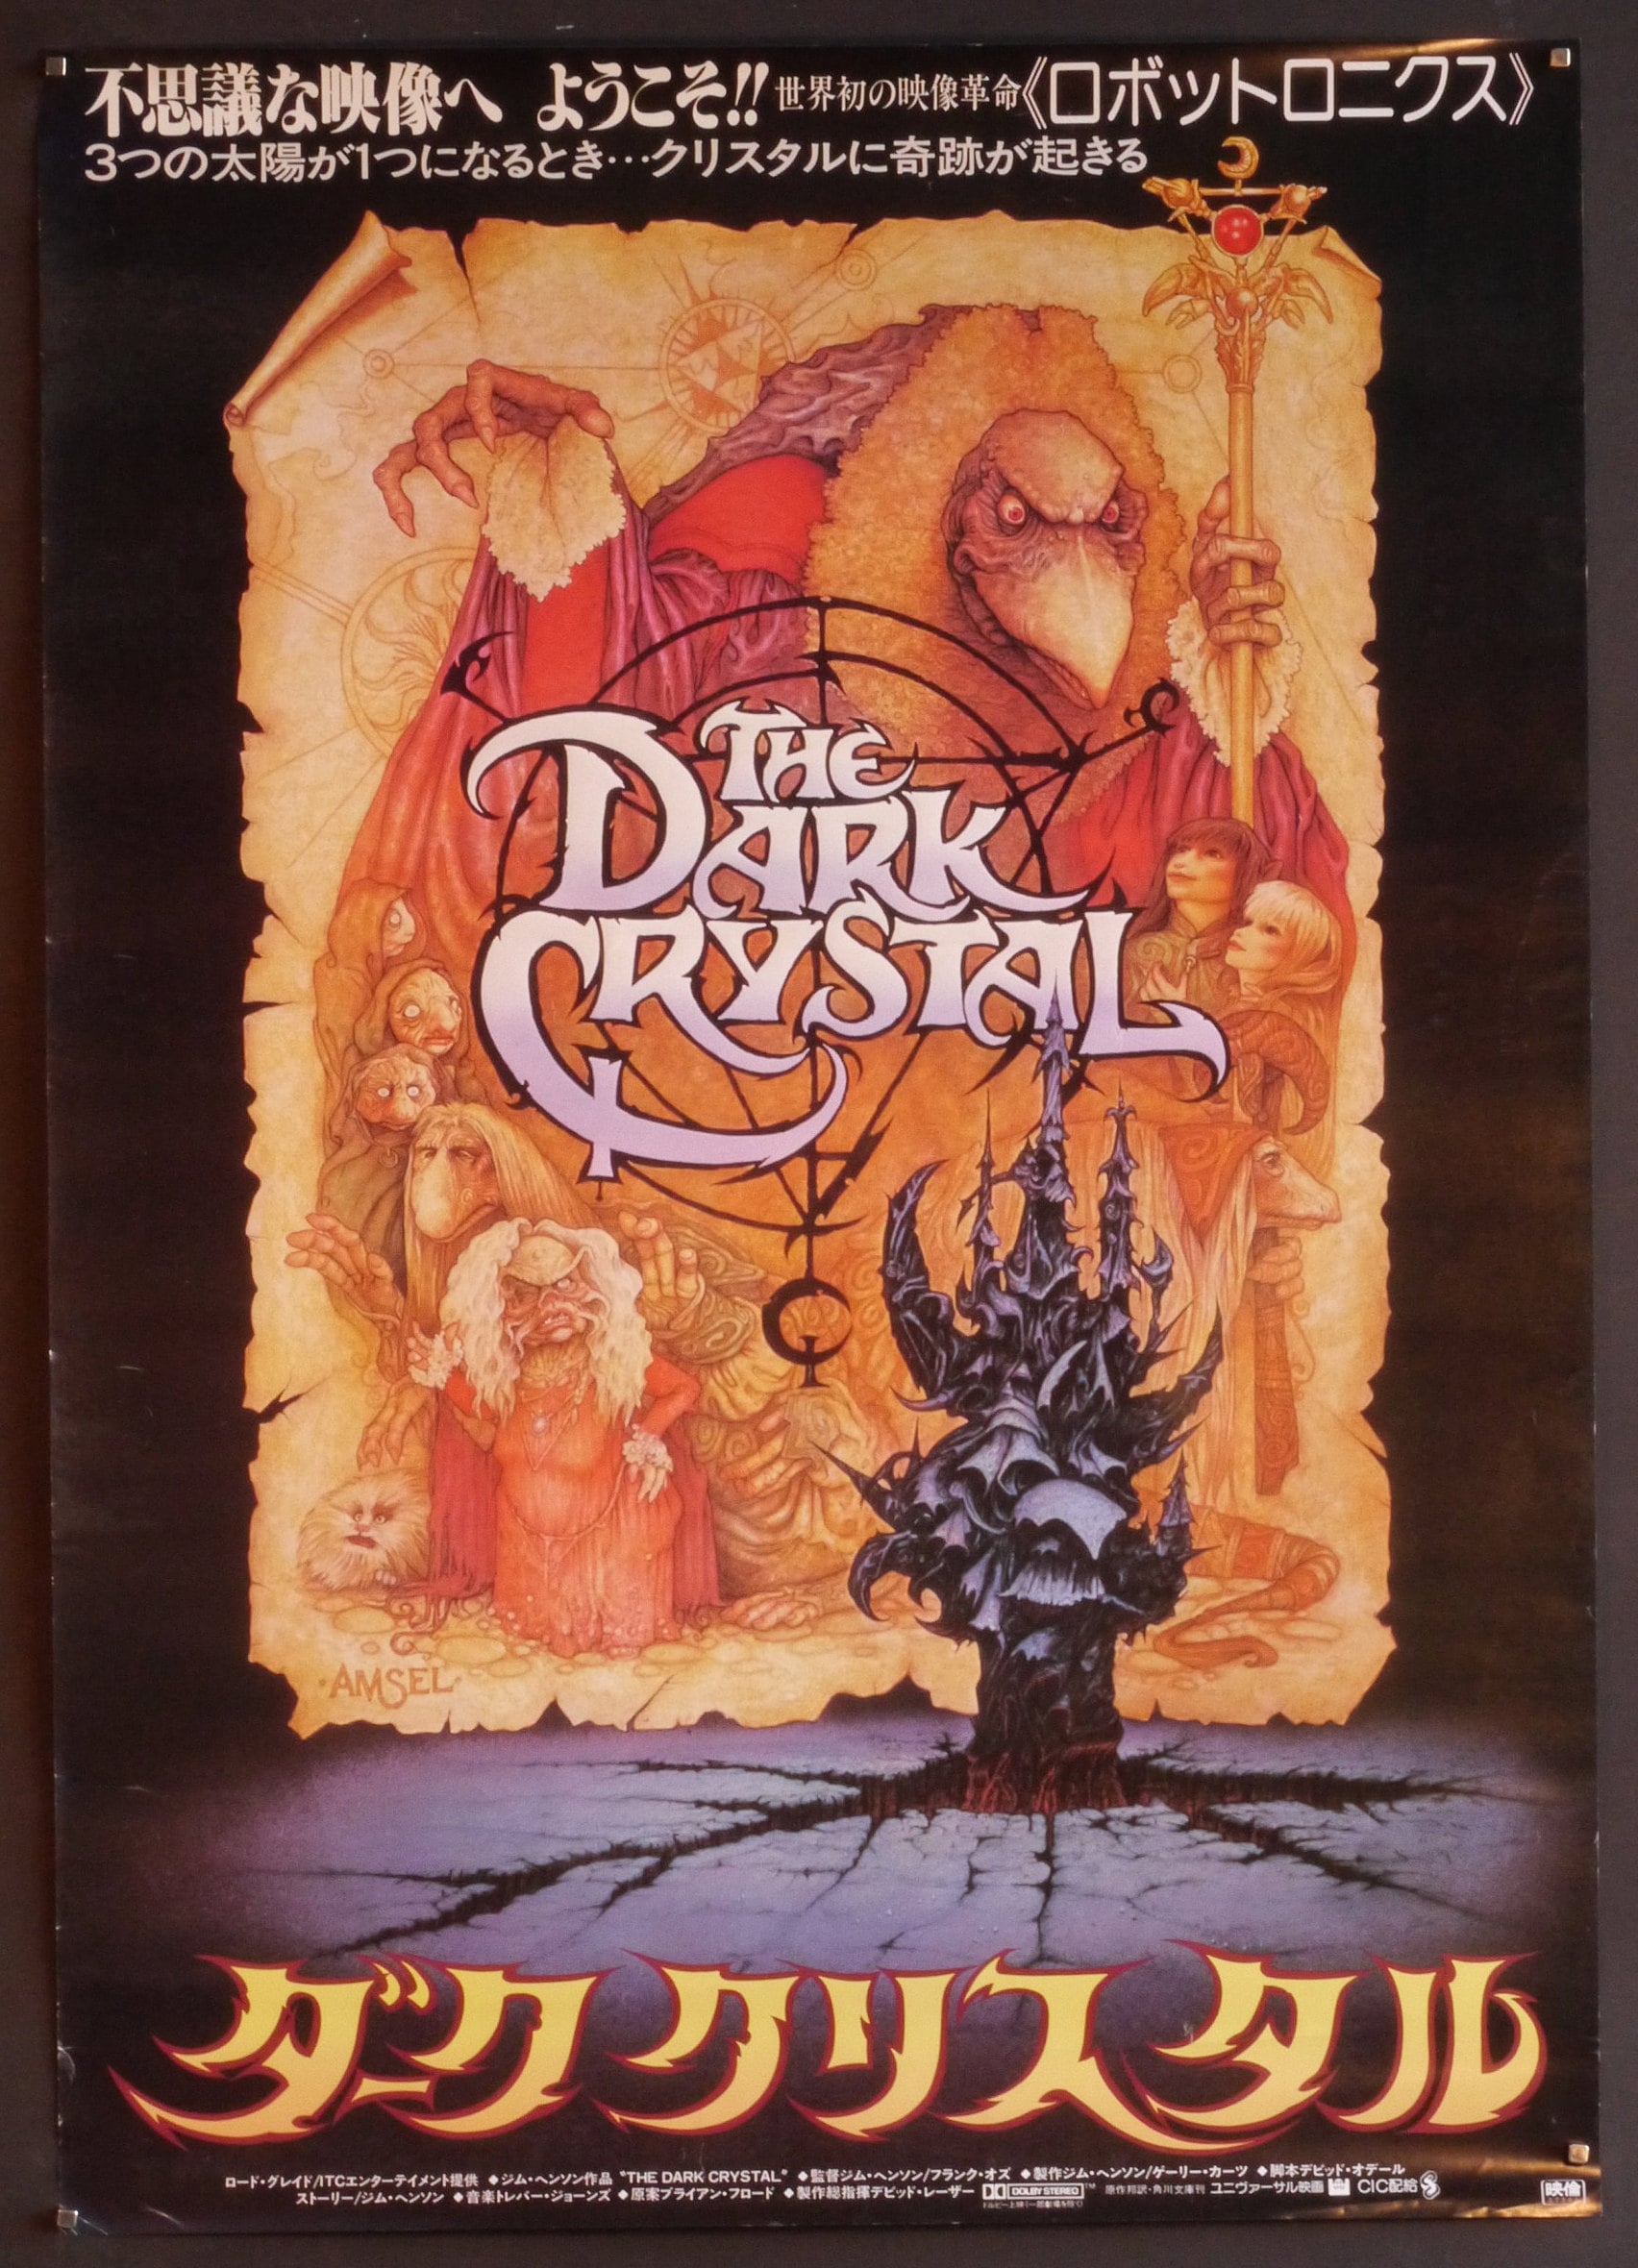 The Dark Crystal-An Original Japanese Movie Poster of Jim - Etsy 日本